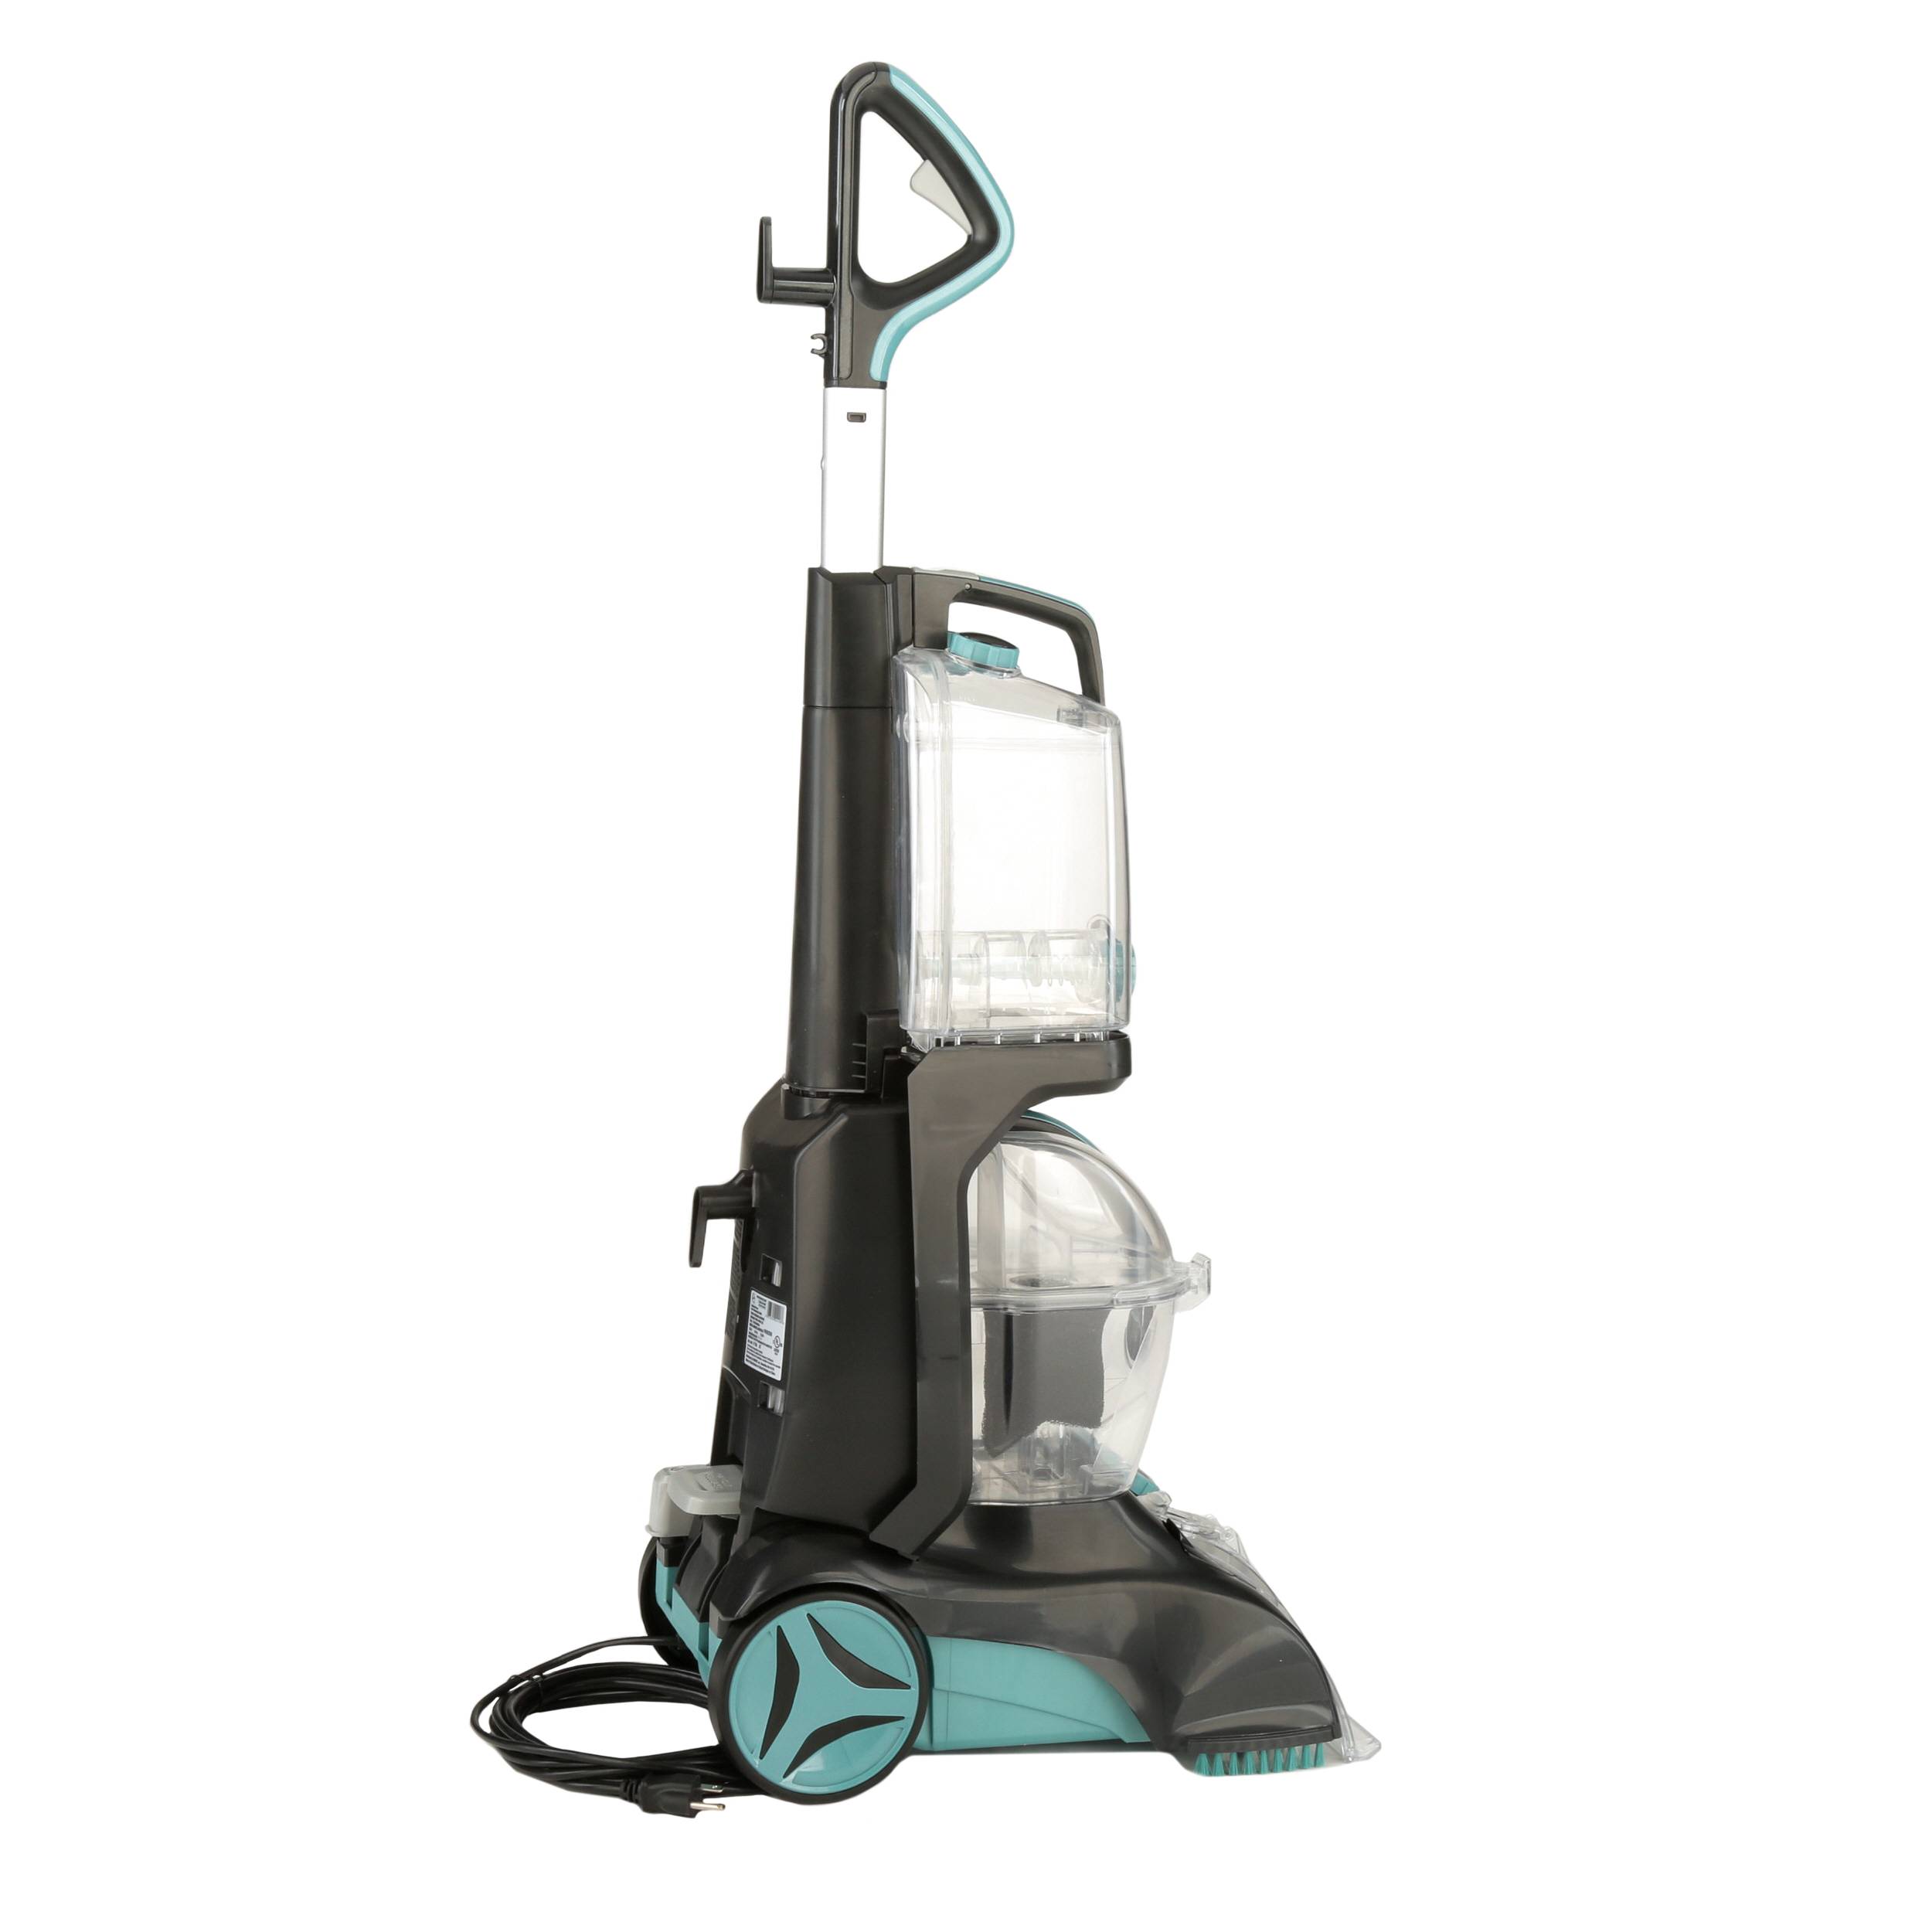 Hoover FH50258 Spin Scrub Carpet Washer Power Scrub Elite Pet Plus